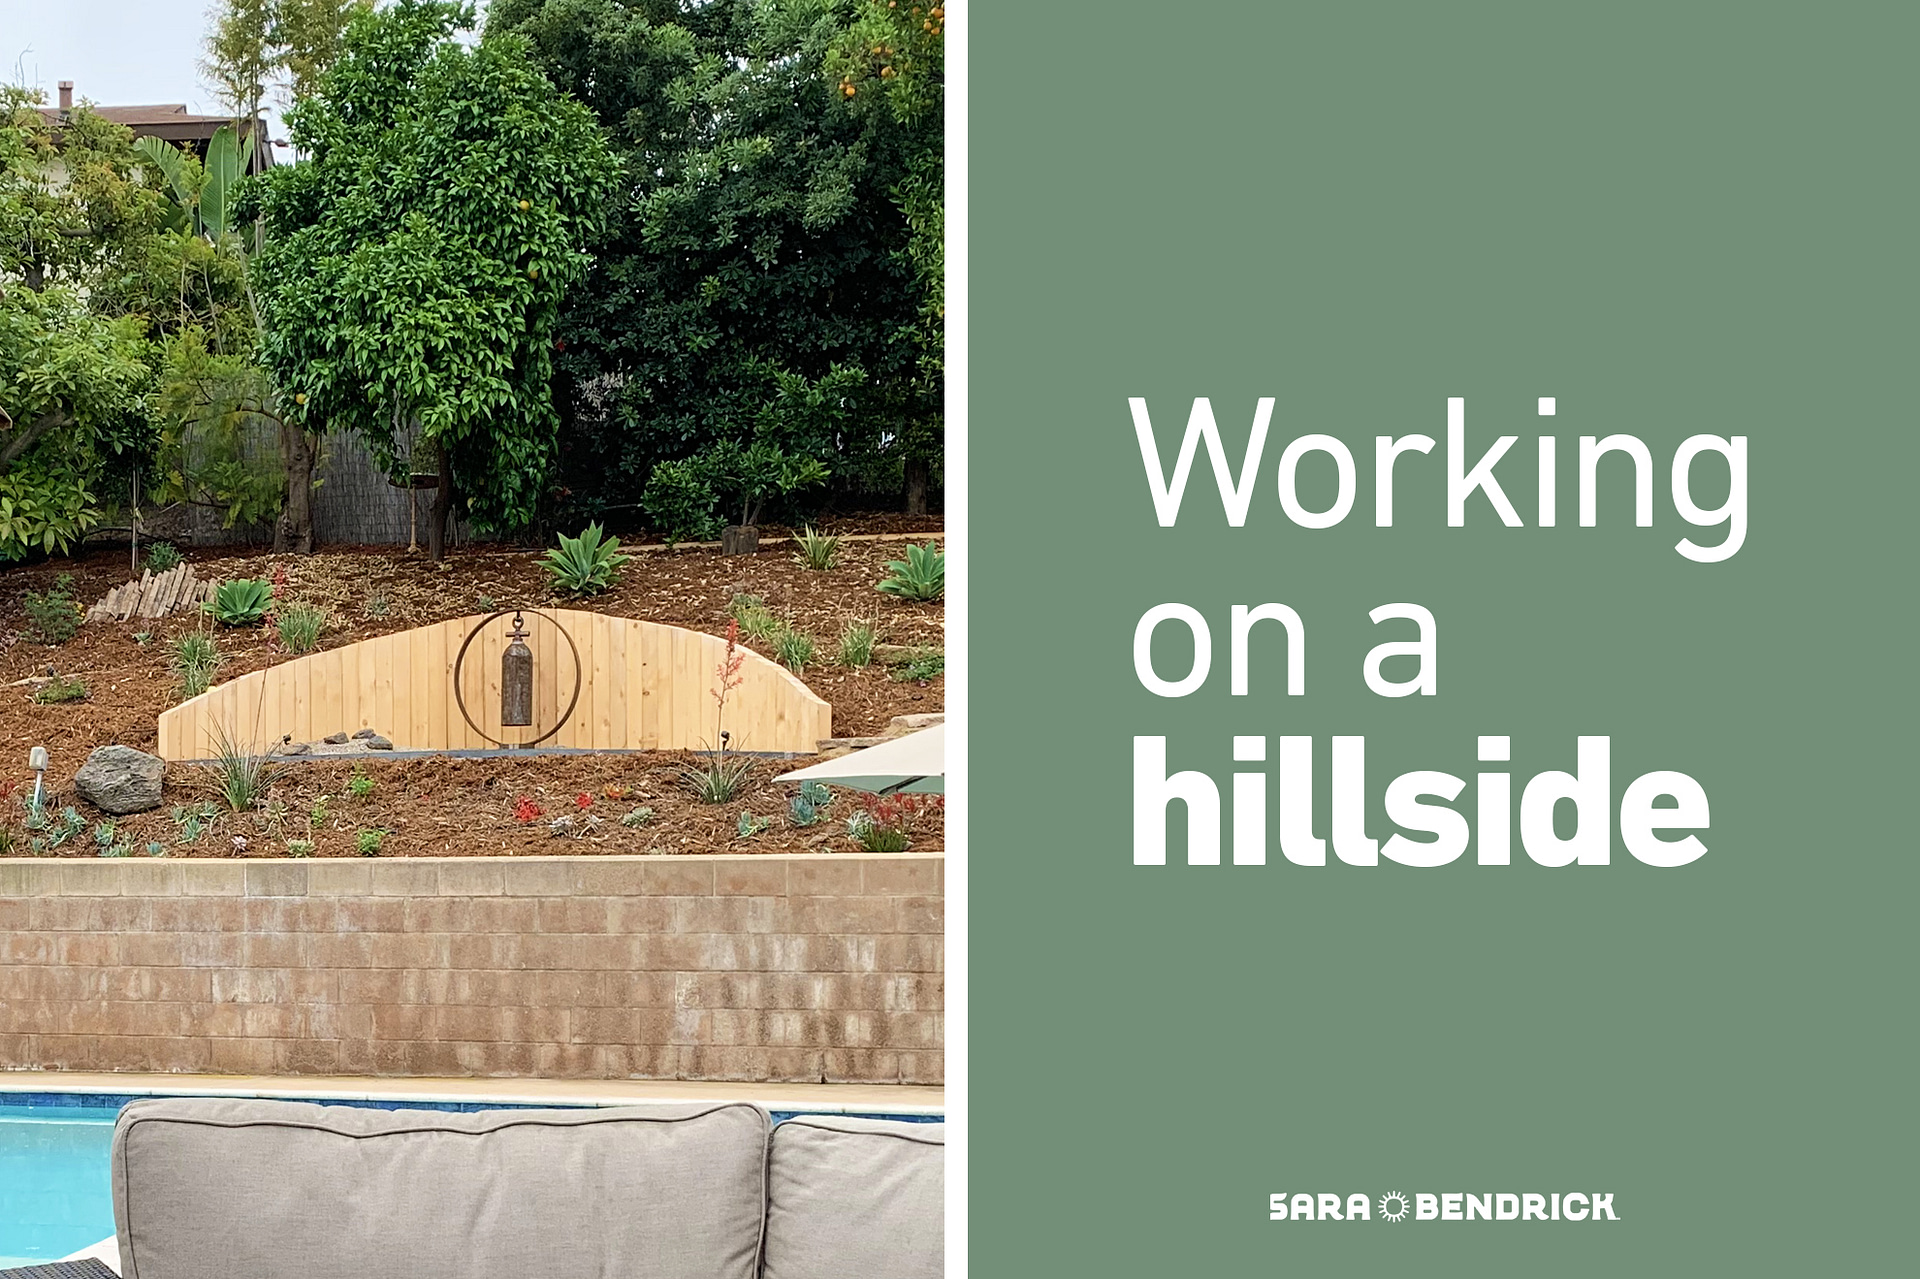 5 creative ways to landscape a sloped yard - Sara Bendrick